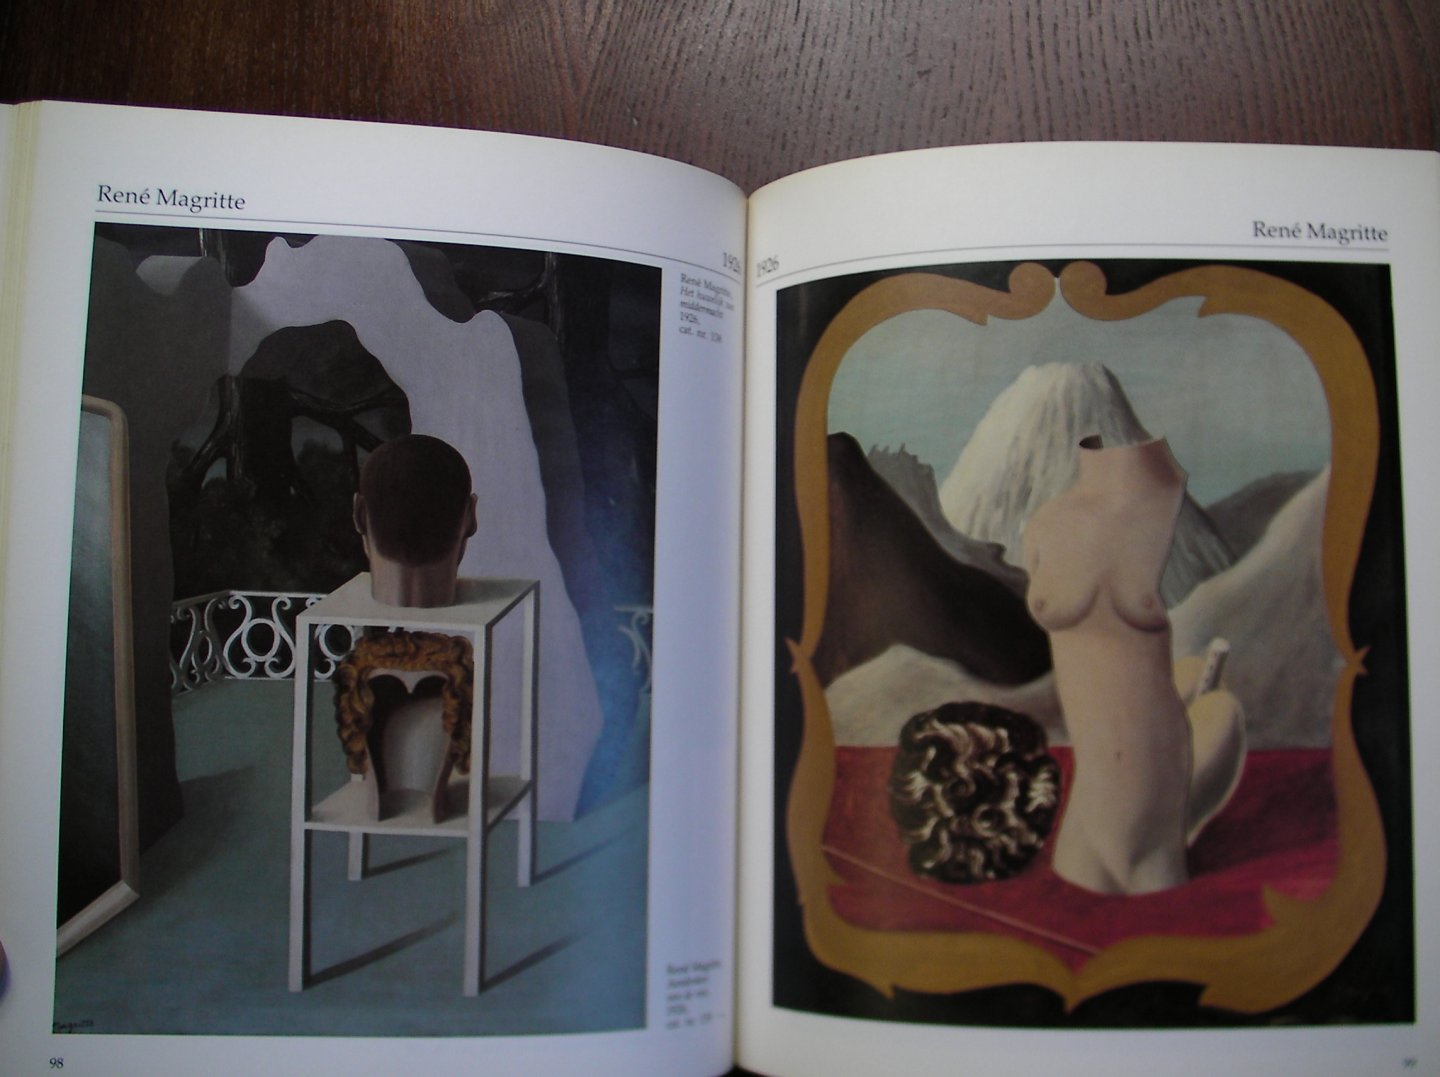  - René Magritte en het Surrealisme in België